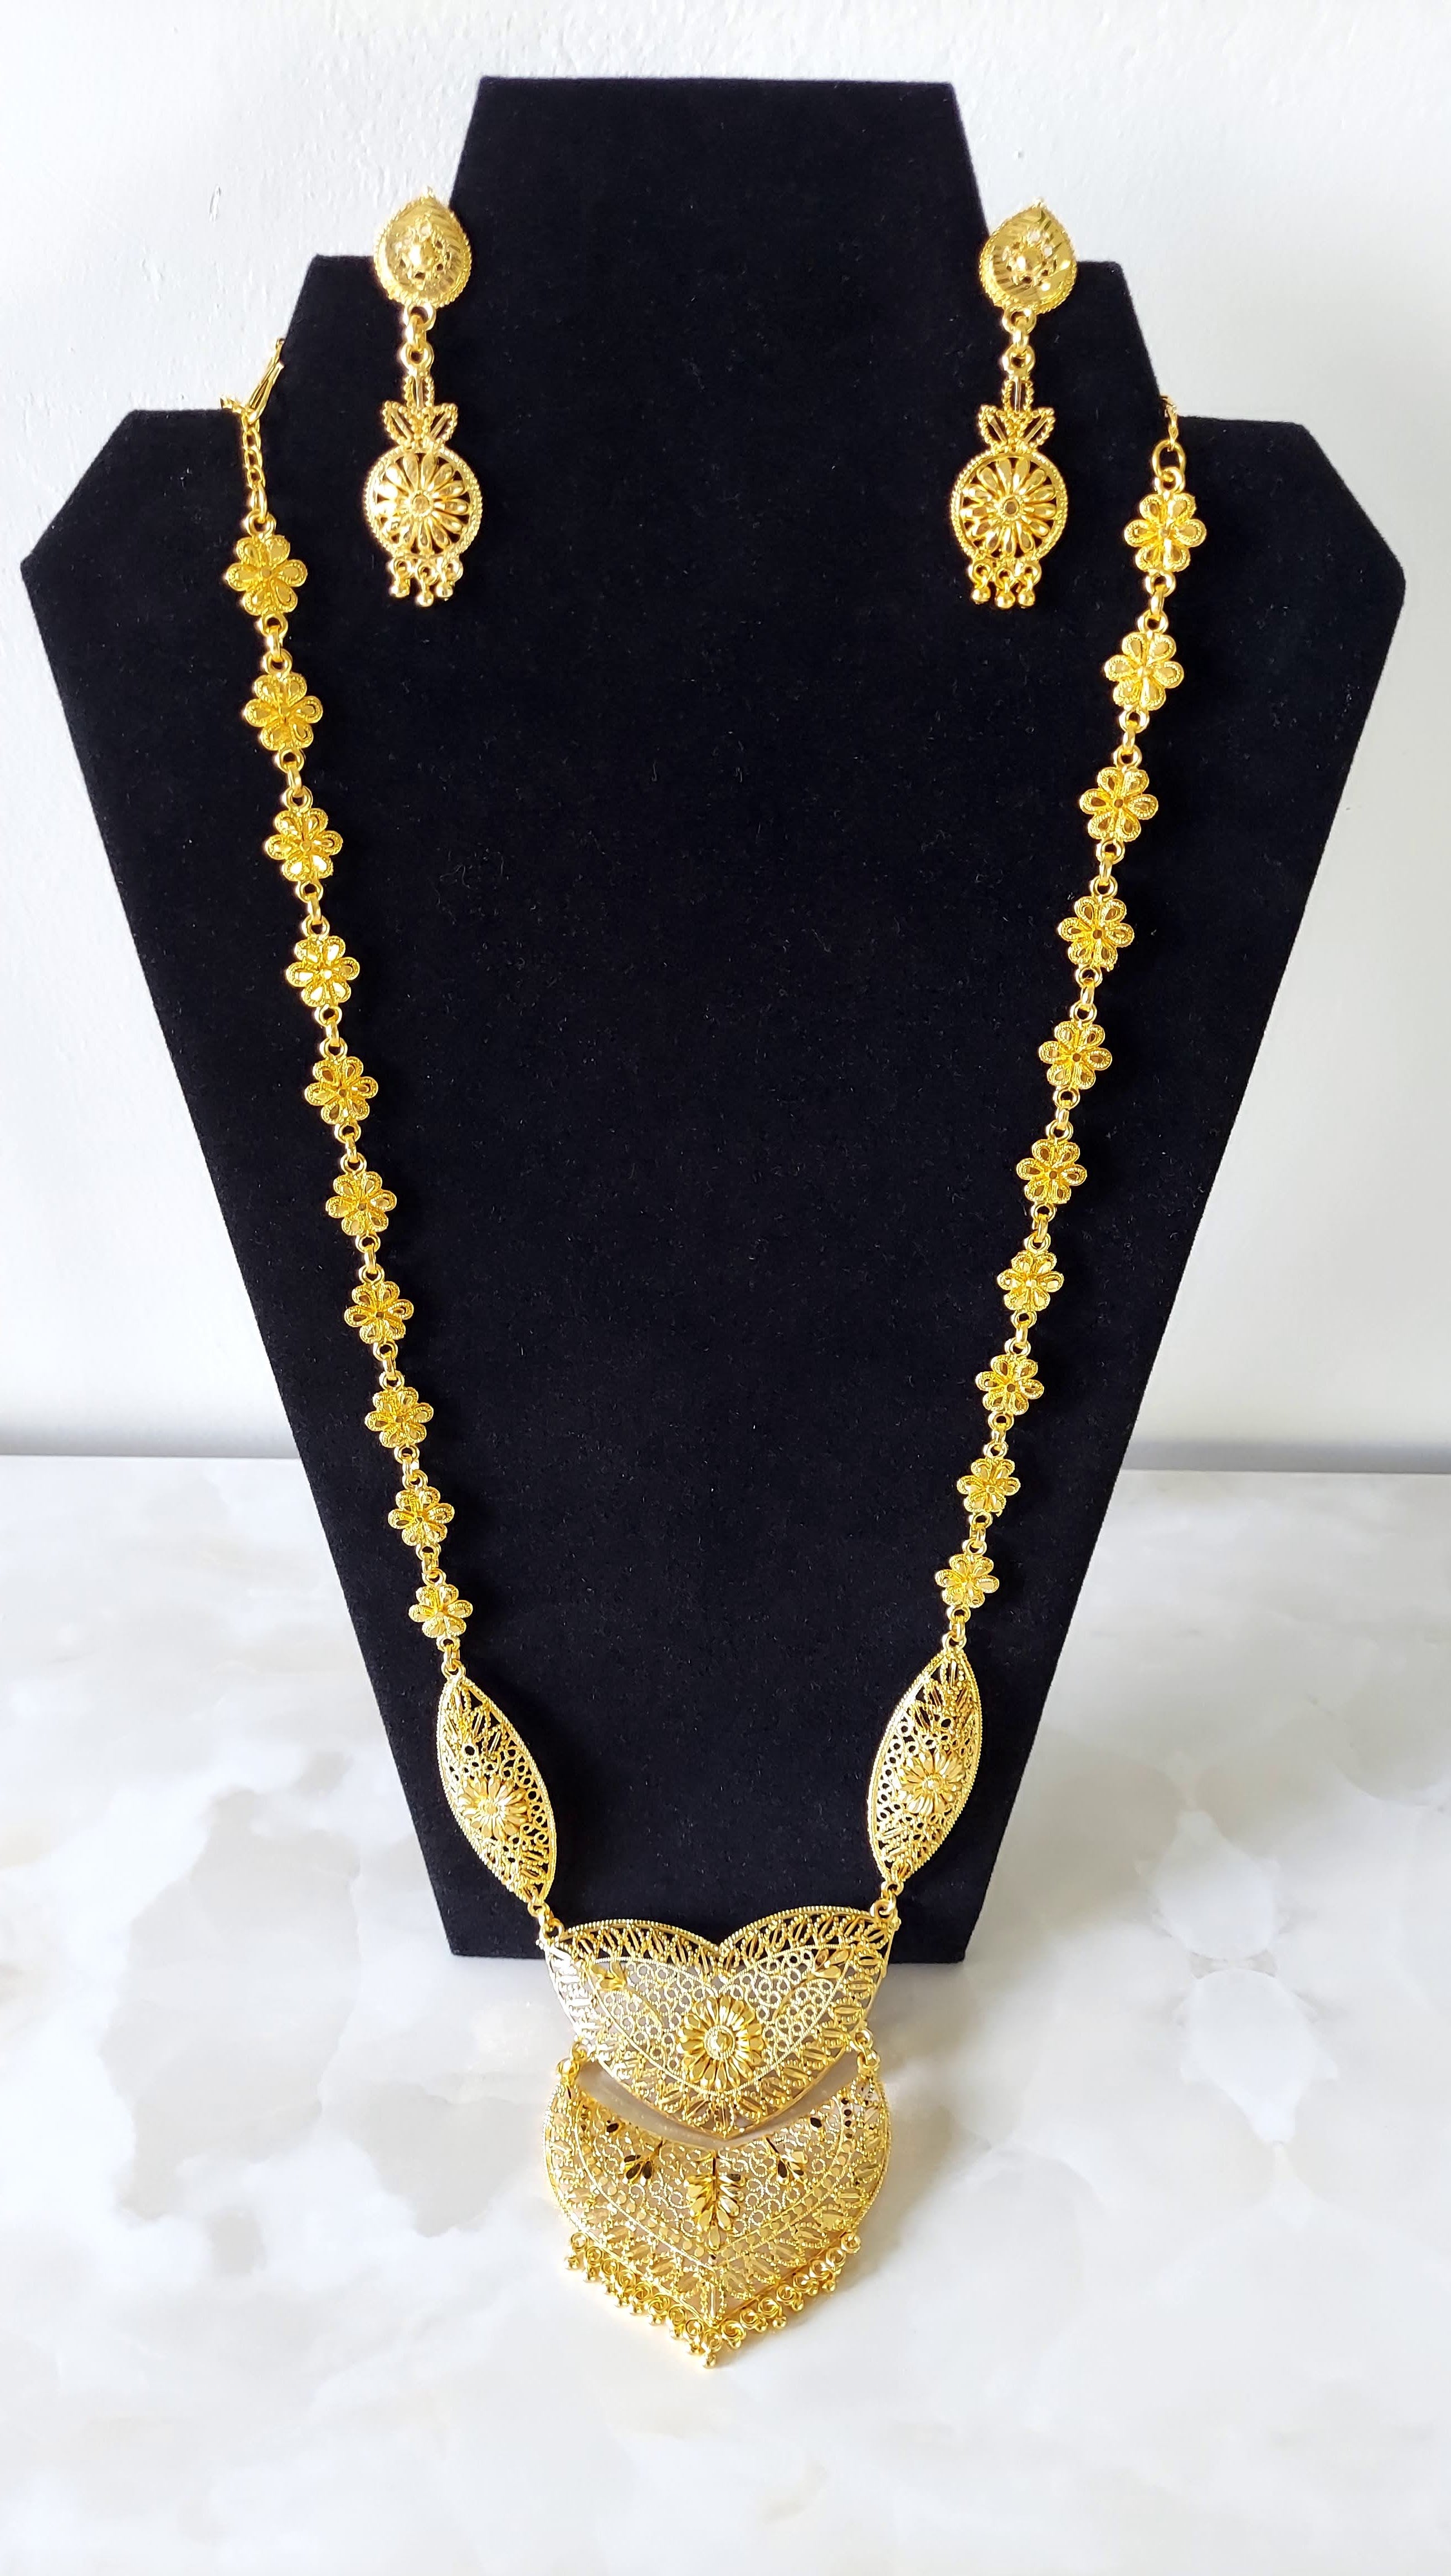 22K Gold Plated Indian Wedding 8'' Long Necklace Earrings Set JaR467 | eBay